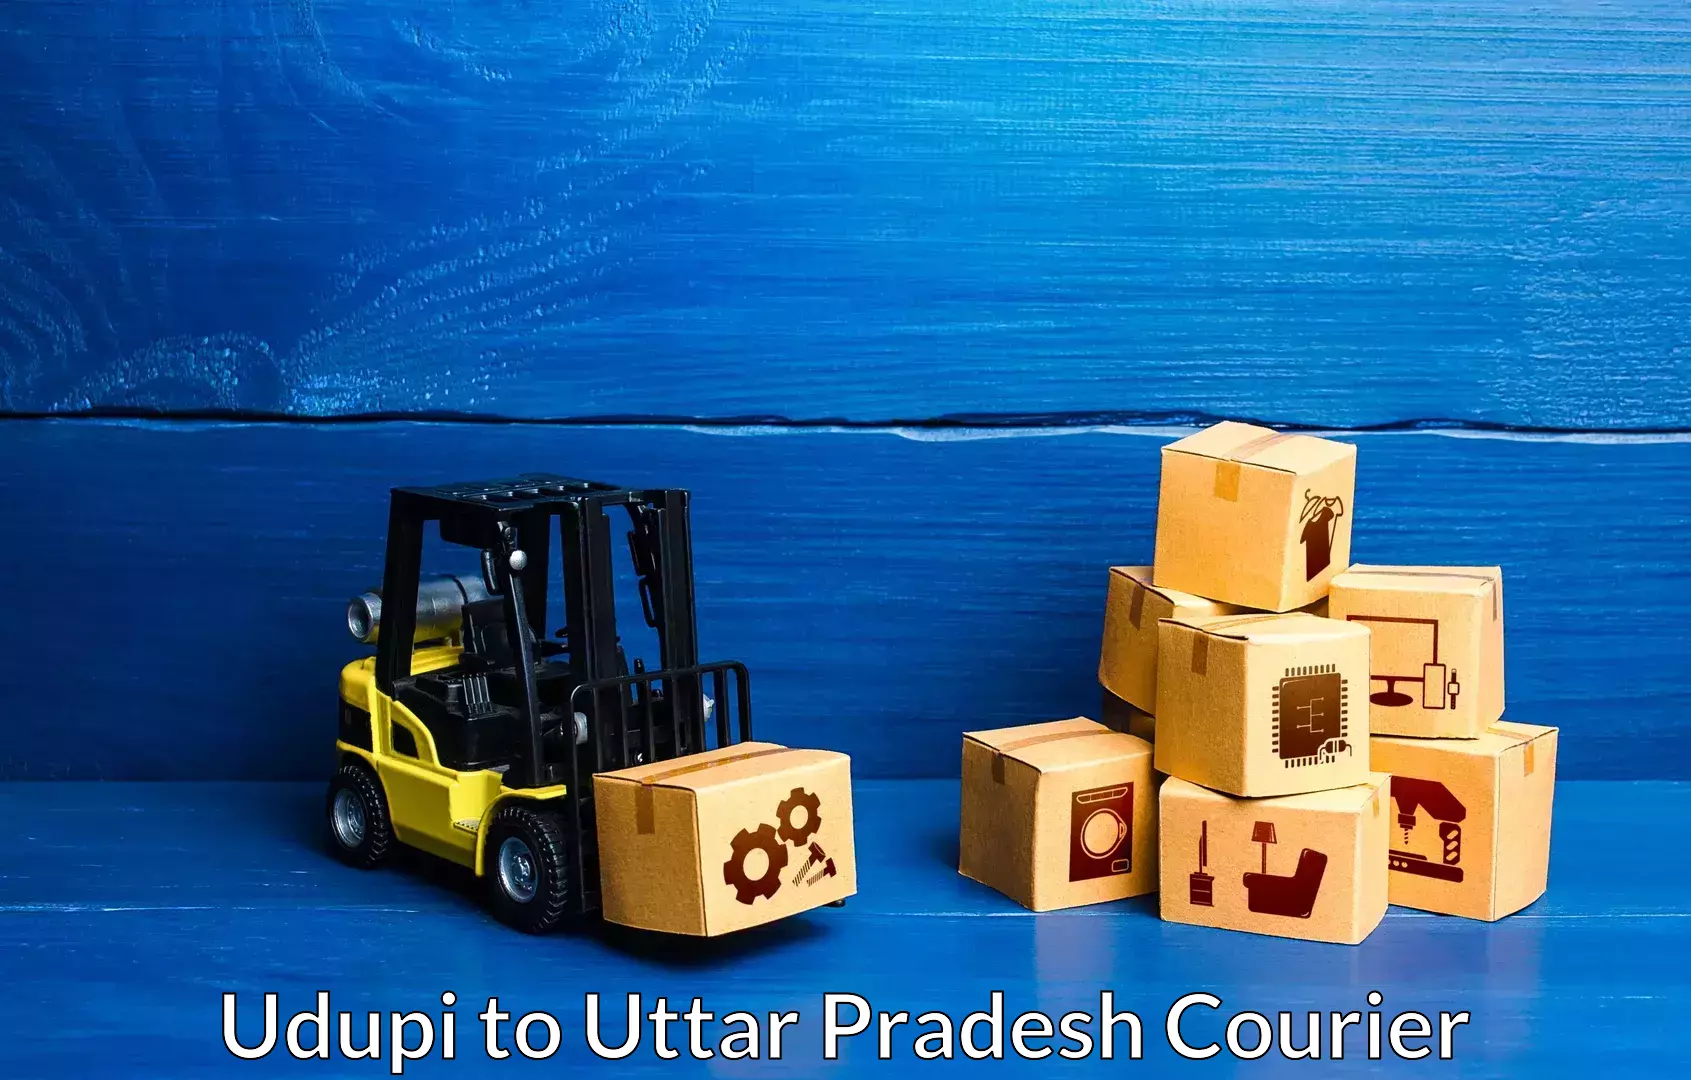 Furniture transport company Udupi to Uttar Pradesh